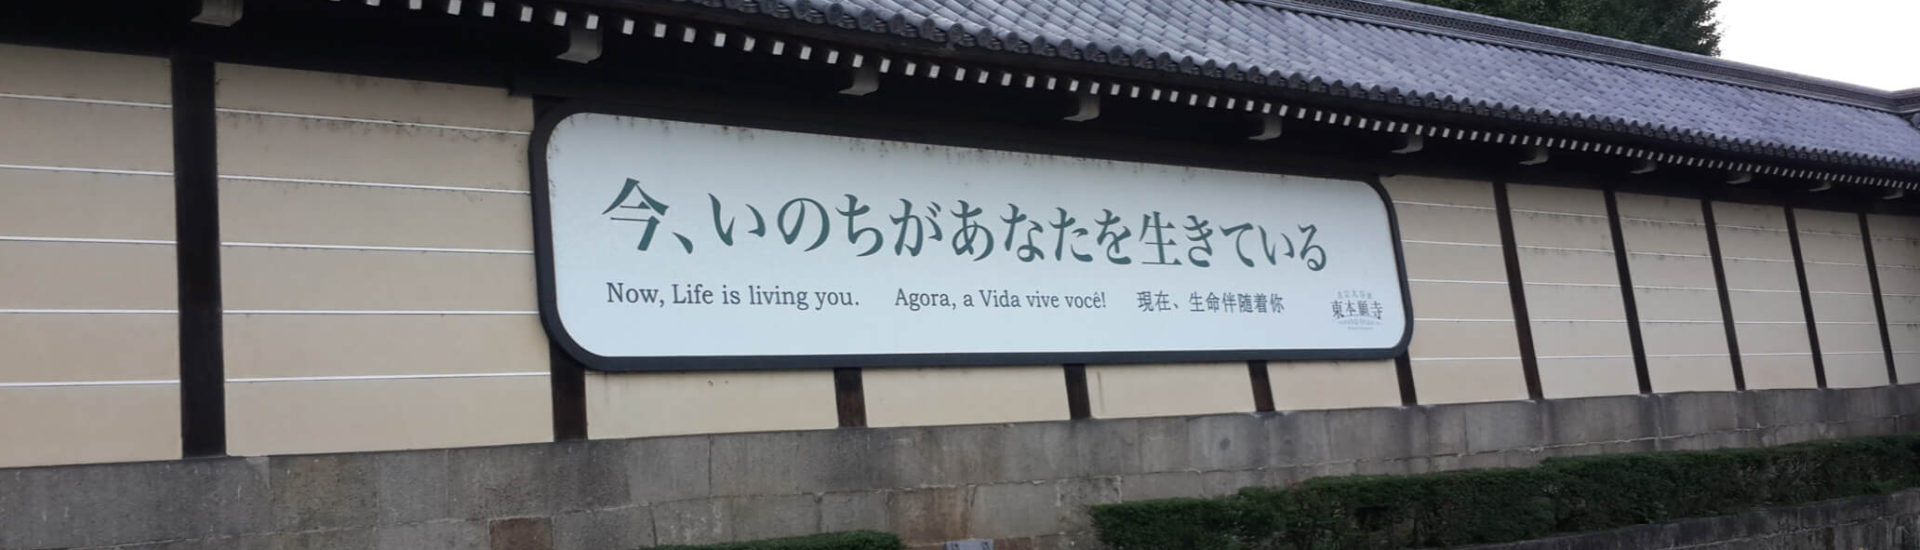 Ahora la vida te vive. Kyoto